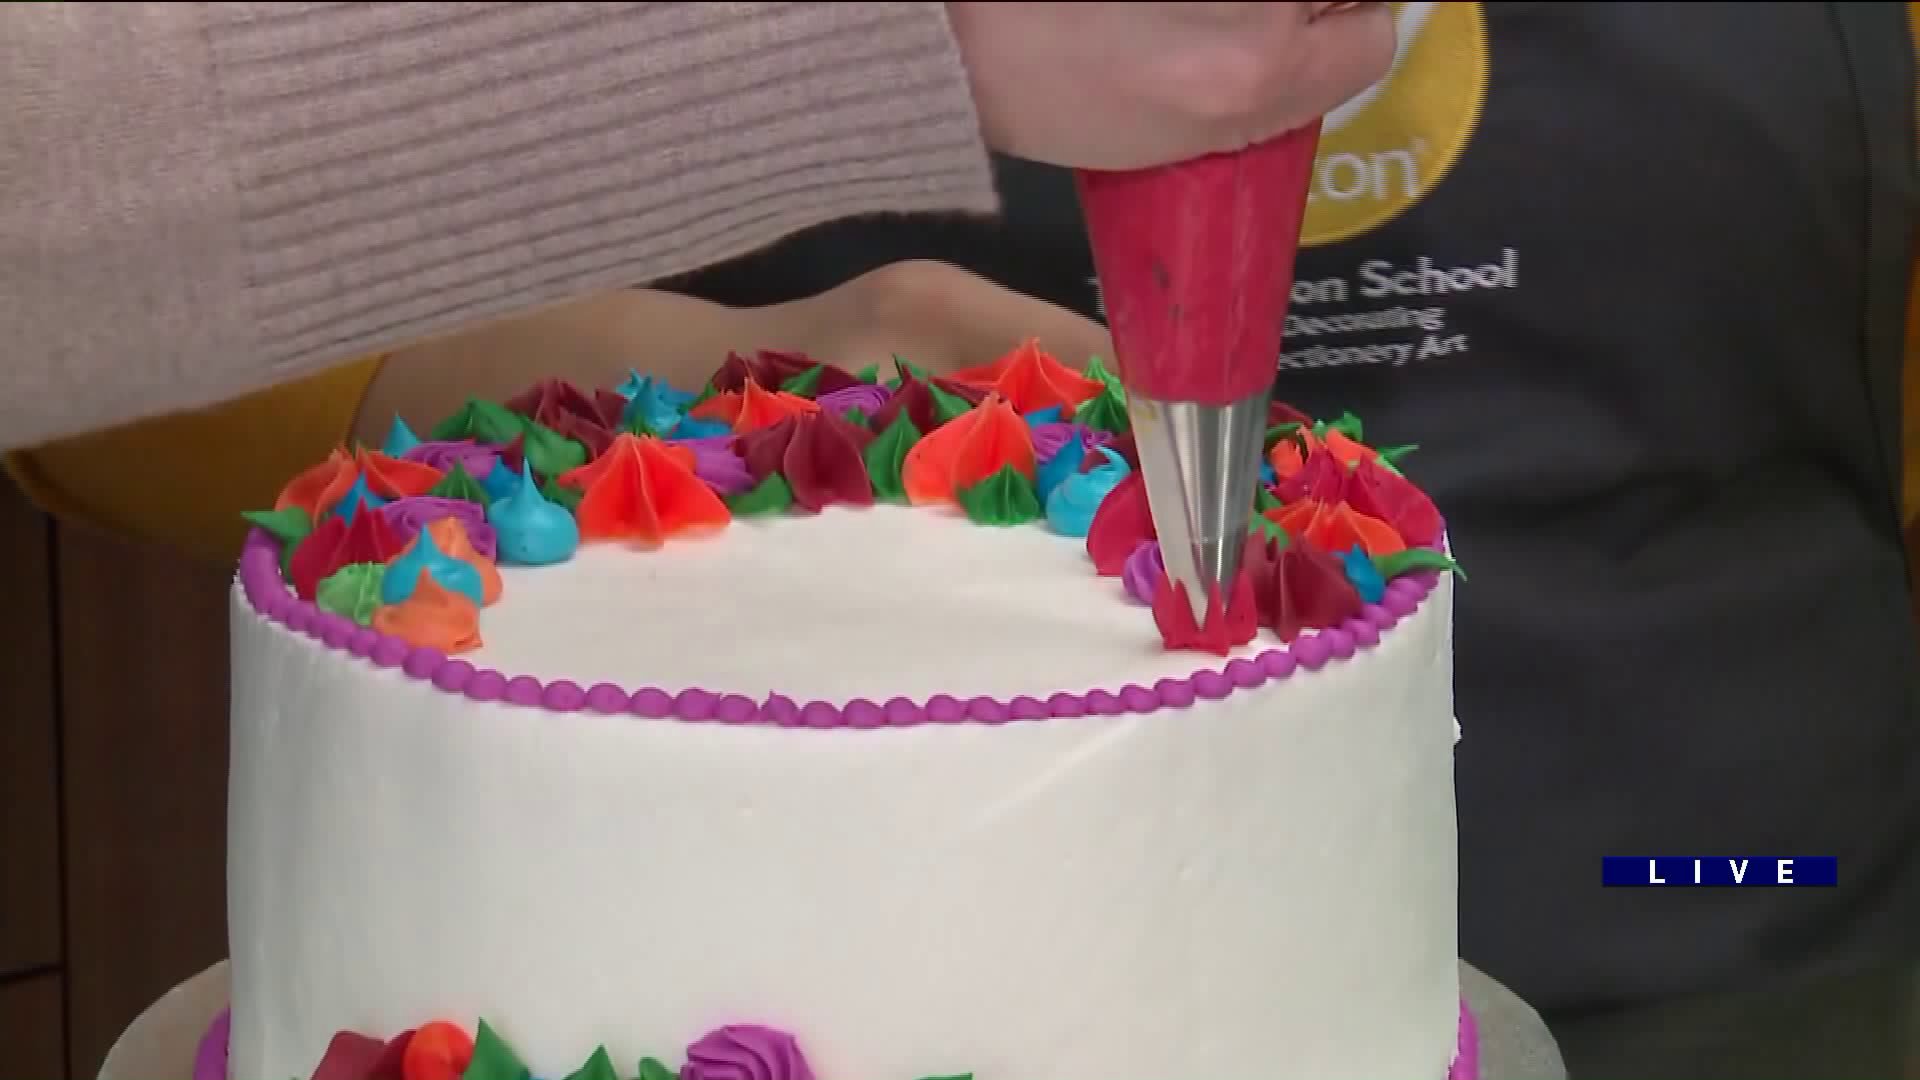 Around Town checks out the Wilton School of Cake Decorating